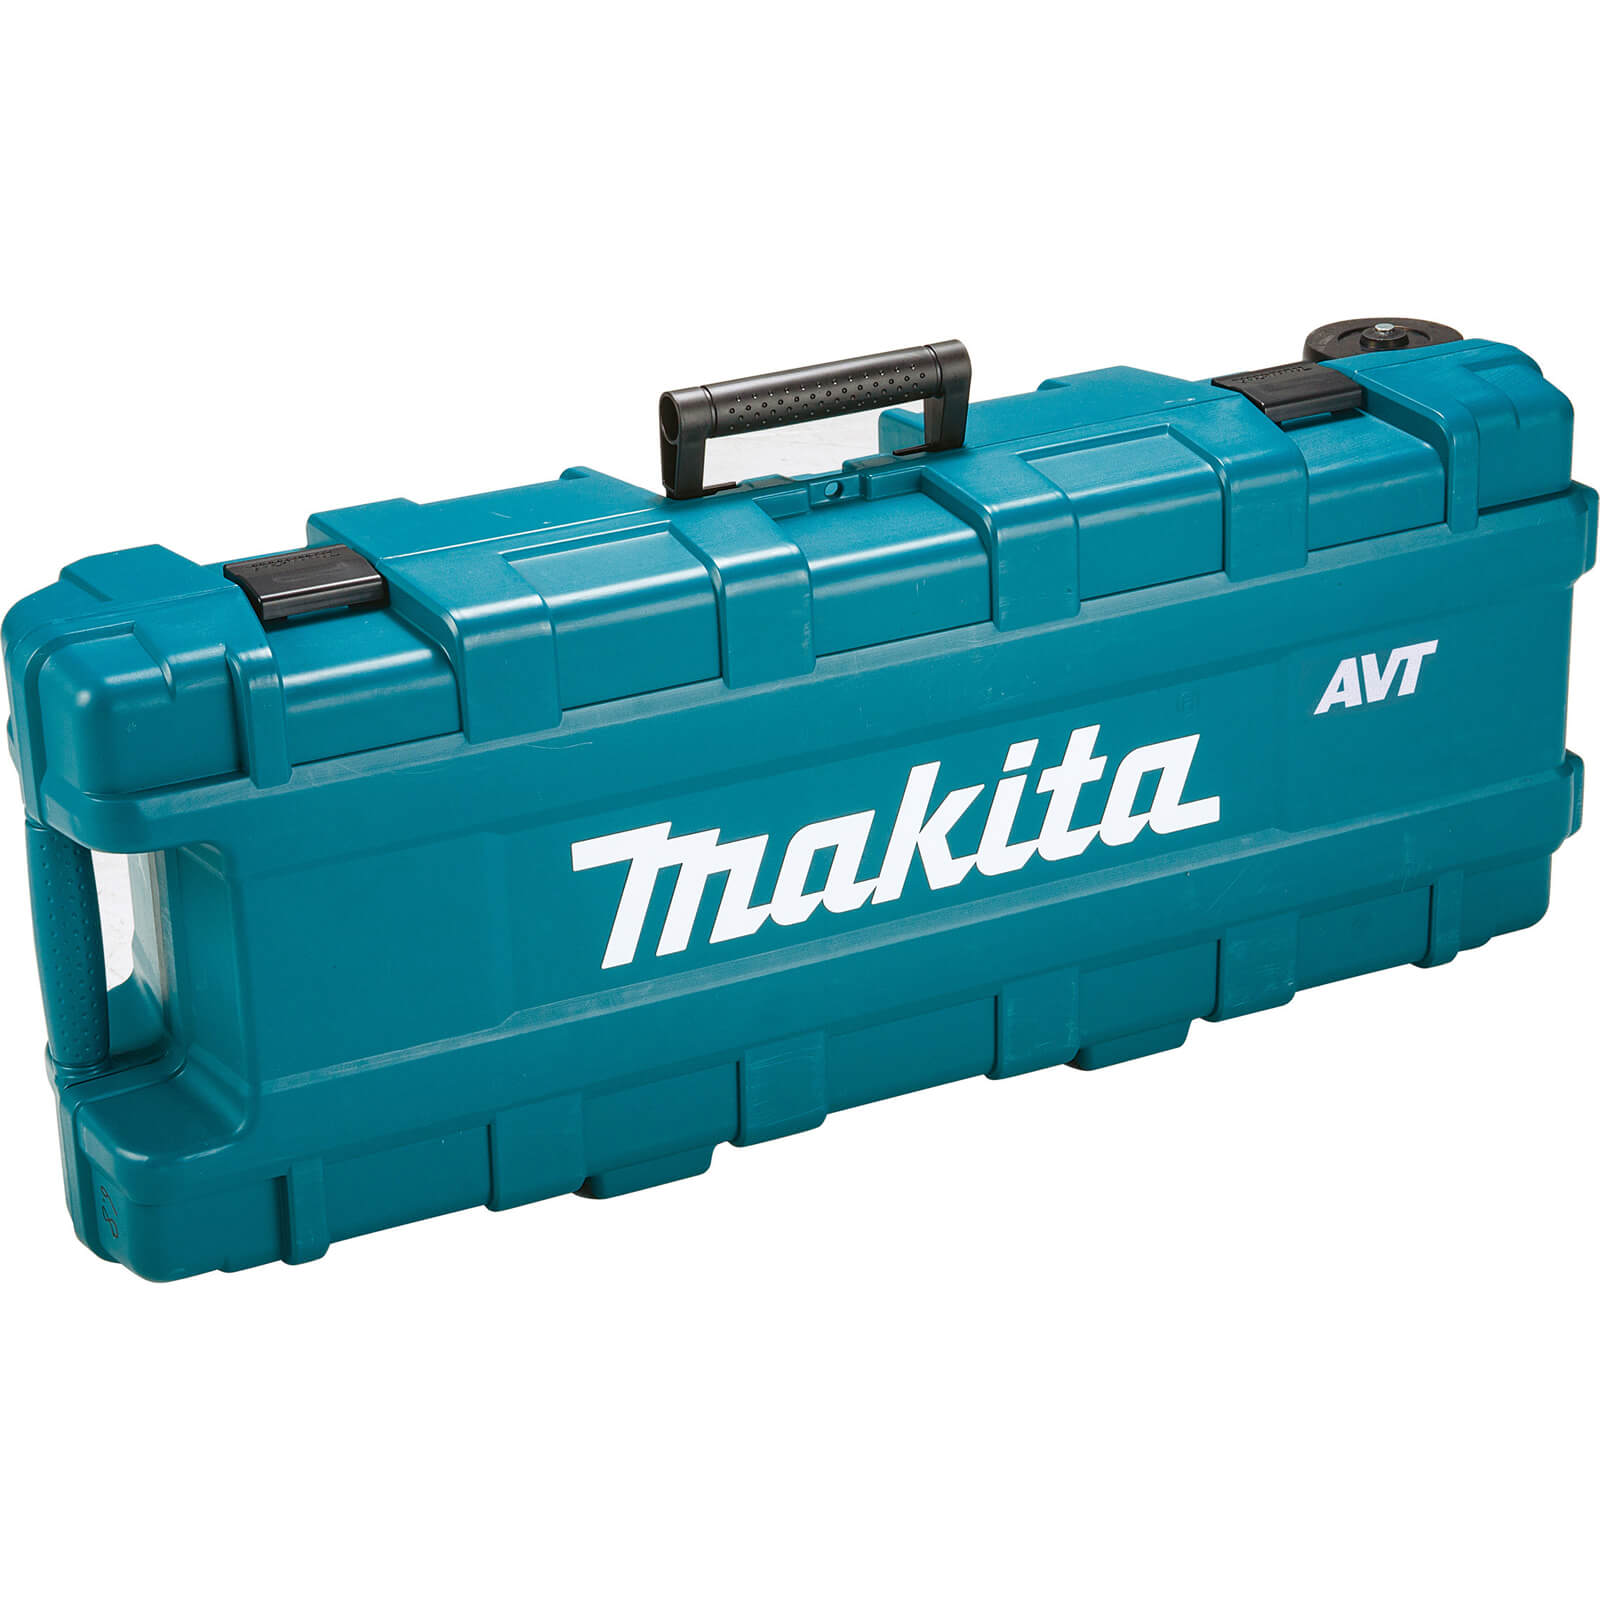 Image of Makita Plastic Carry Case for HM1511C Demolition Breaker